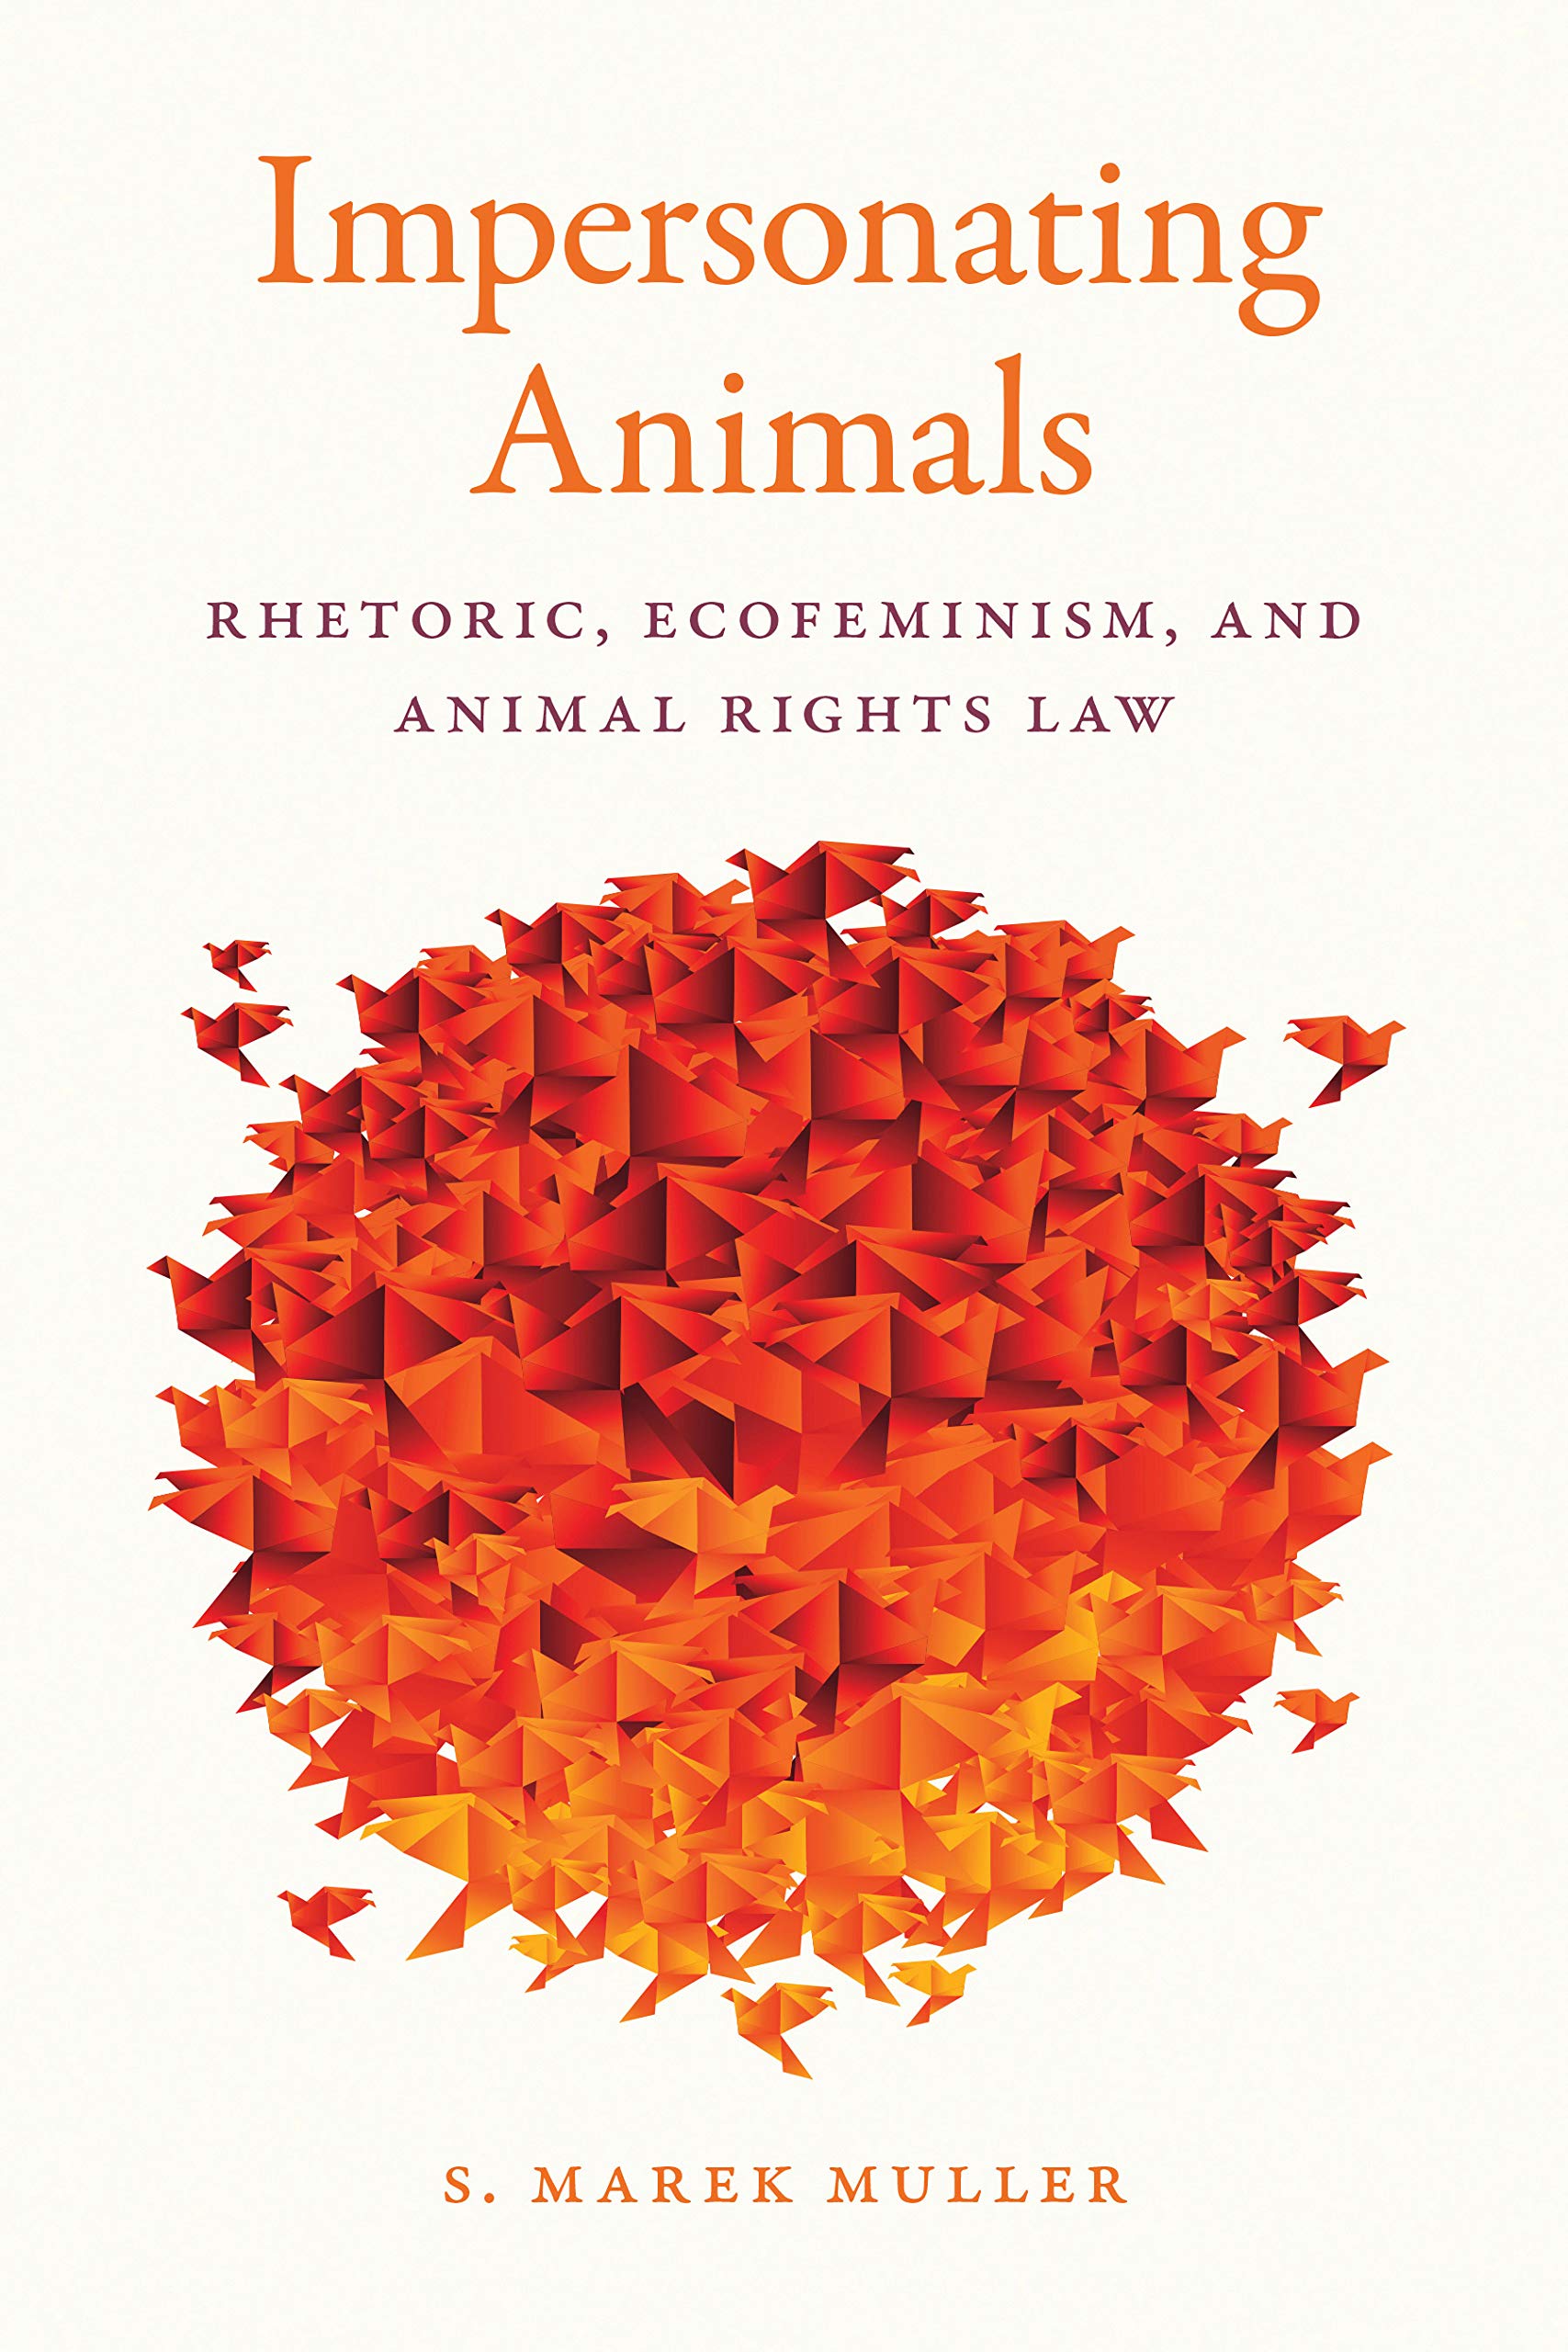 Impersonating Animals: Rhetoric, Ecofeminism, and Animal Rights Law